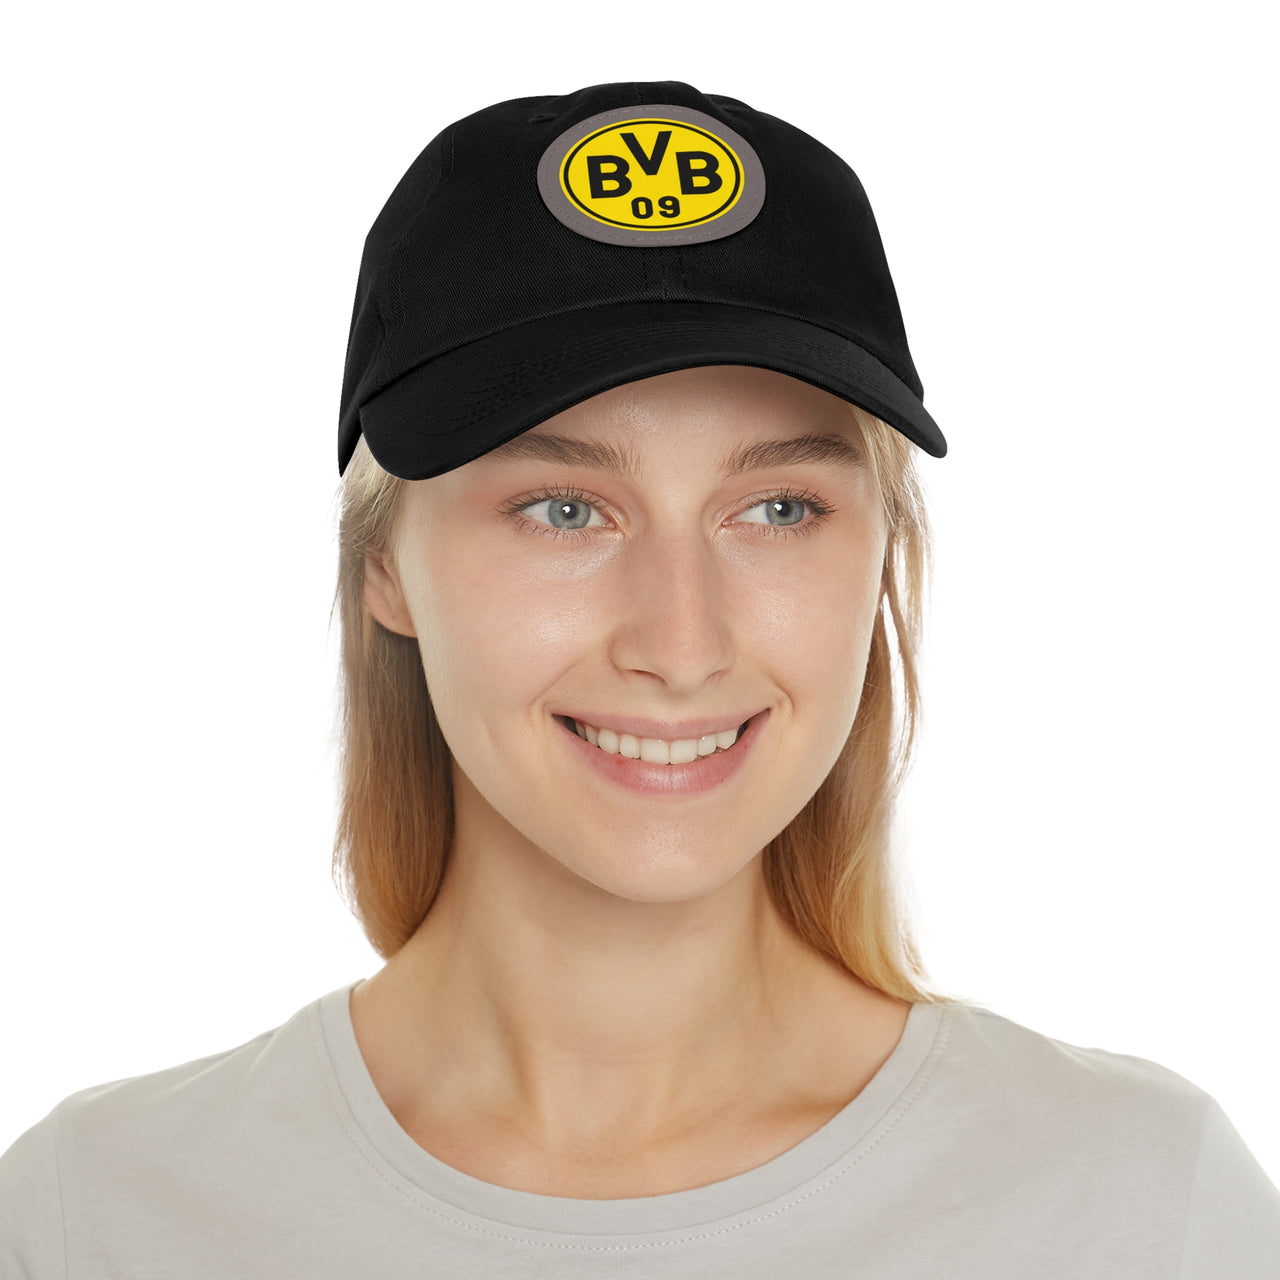 Borussia Dortmund Dad Hat with Leather Patch (Round)